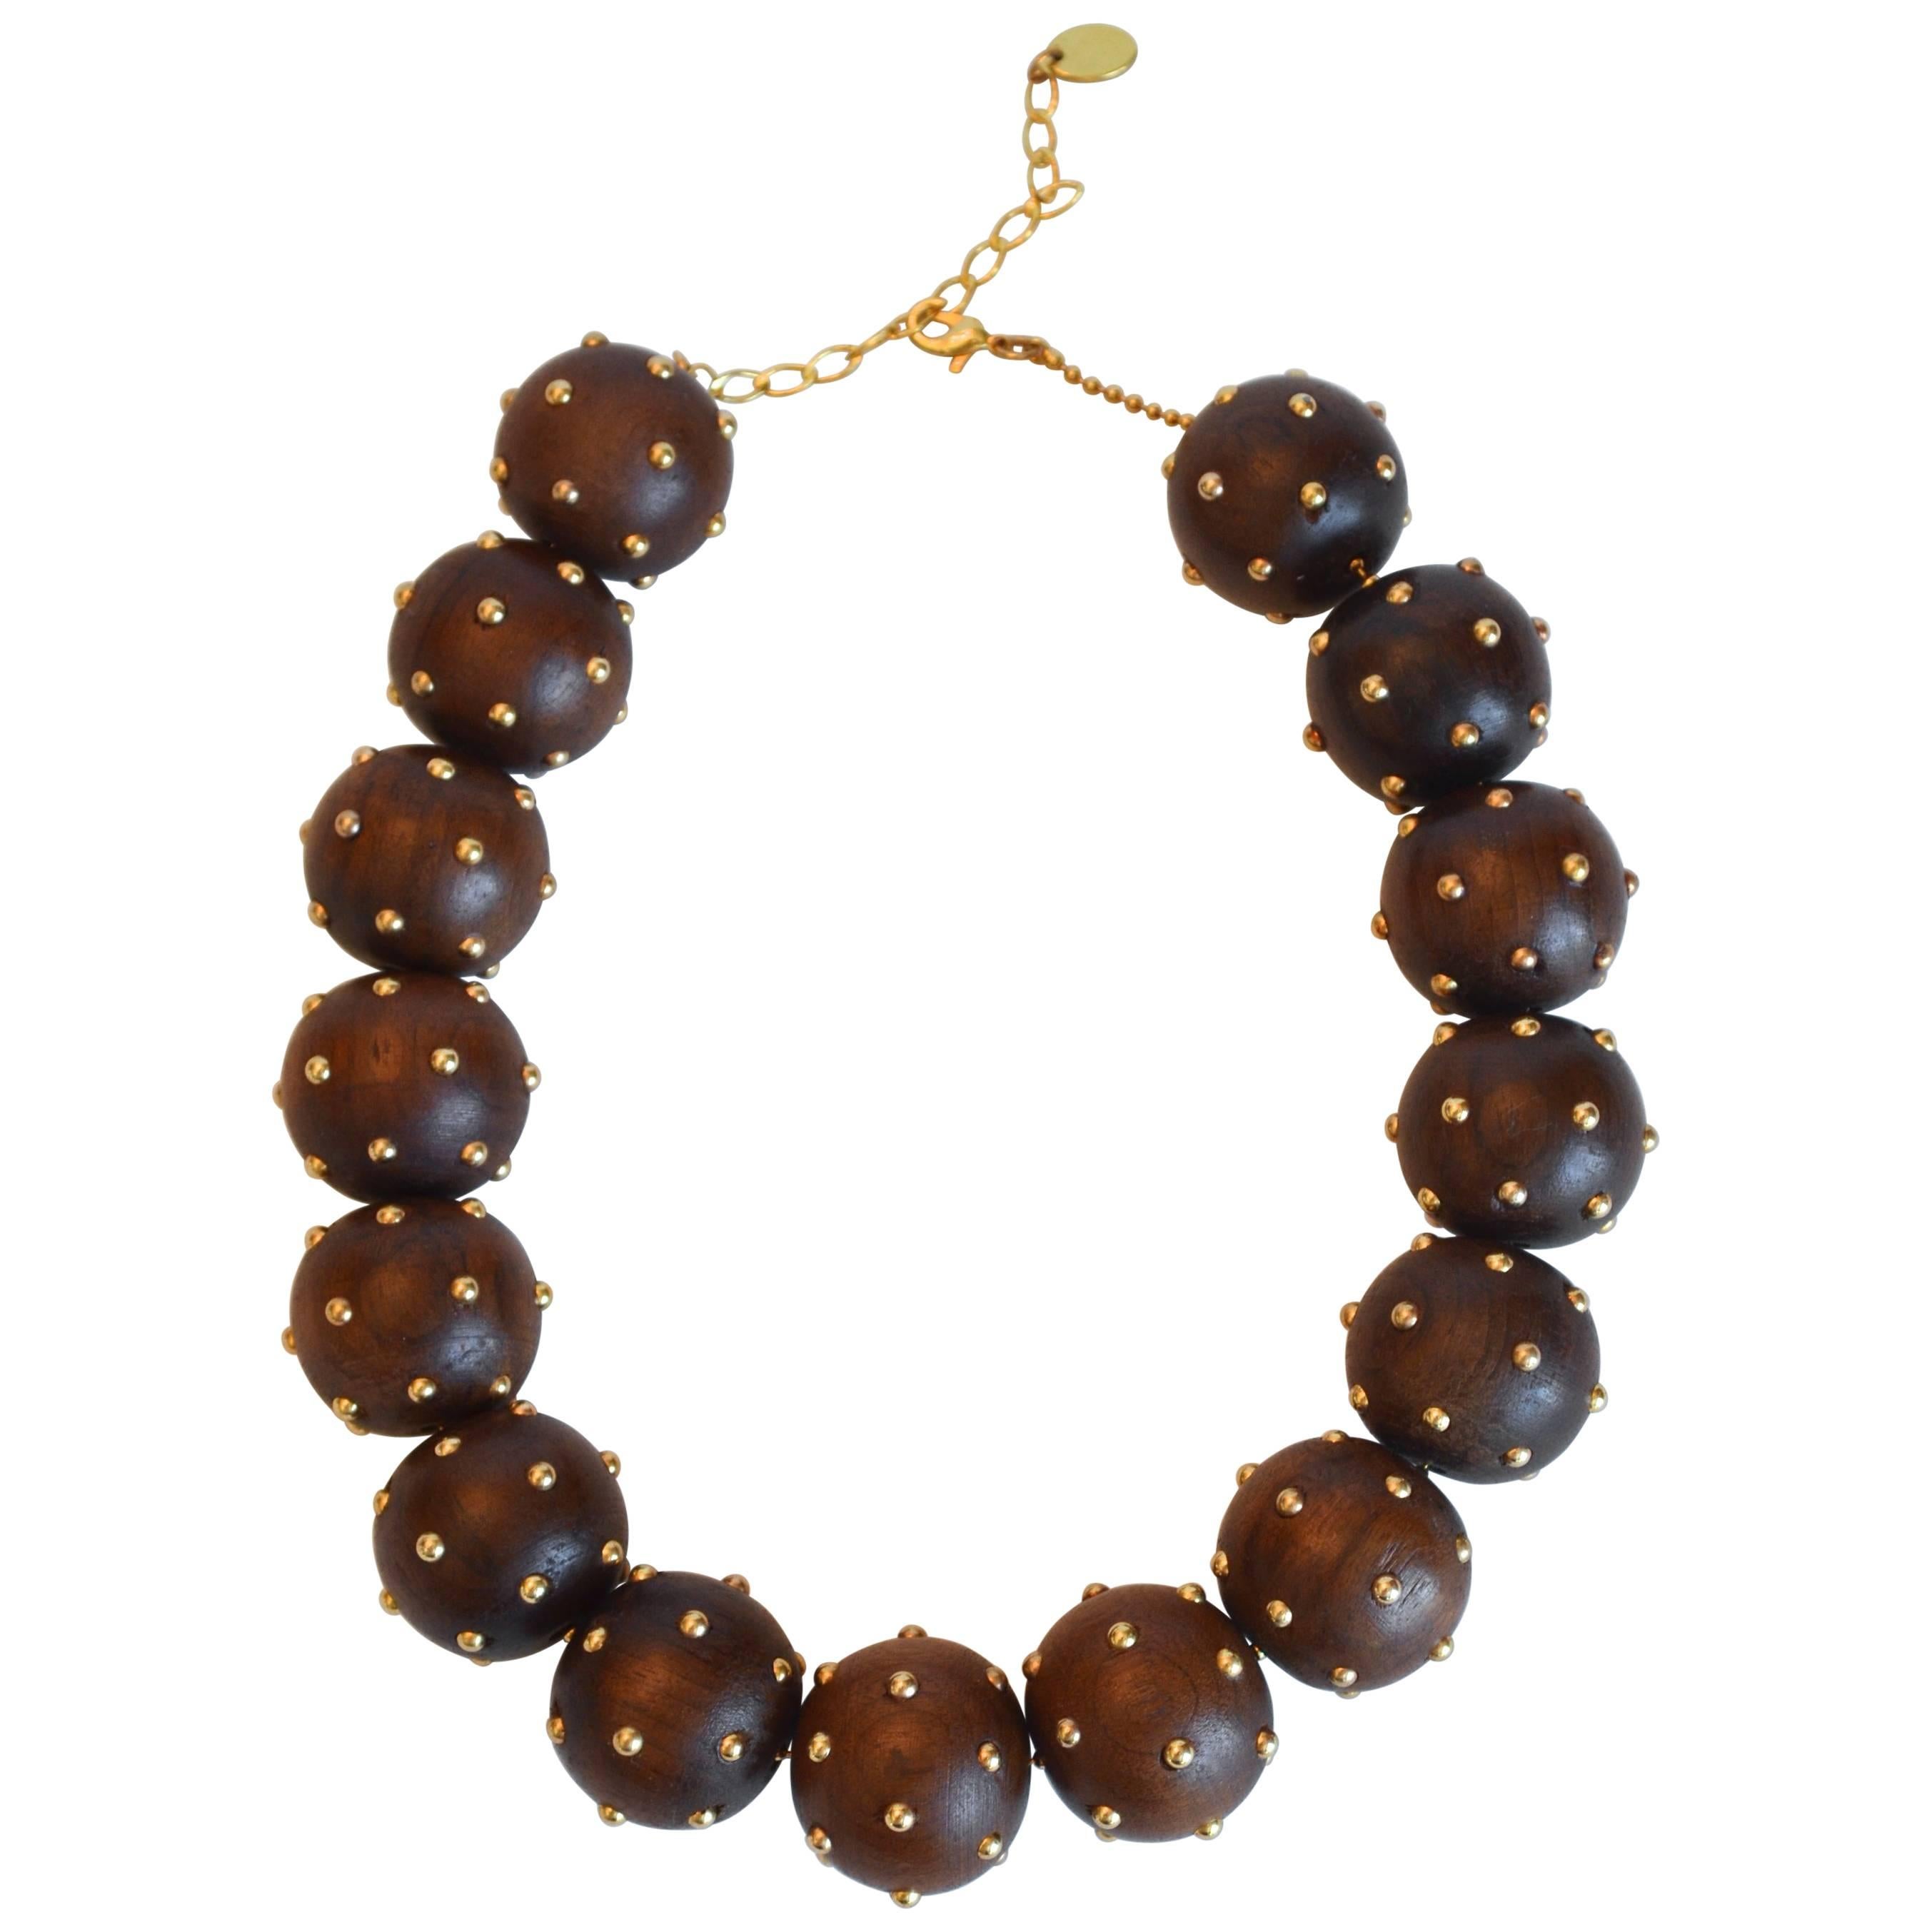 Vanda Jacintho Brazilian Walnut and Brass Ball Necklace